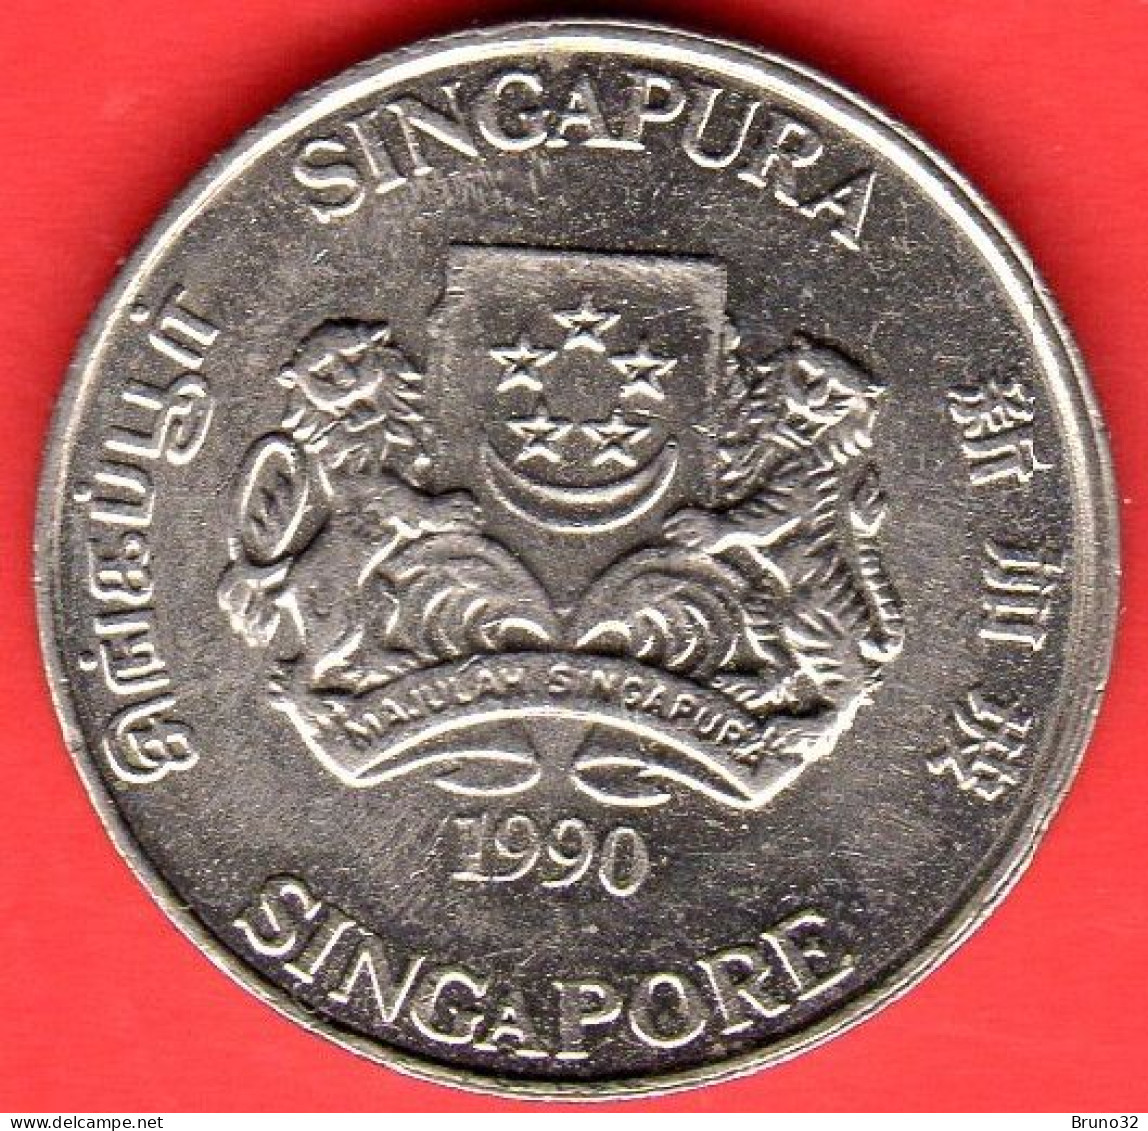 SINGAPORE - Singapura - 1990 - 20 Cents - QFDC/aUNC - Come Da Foto - Singapur